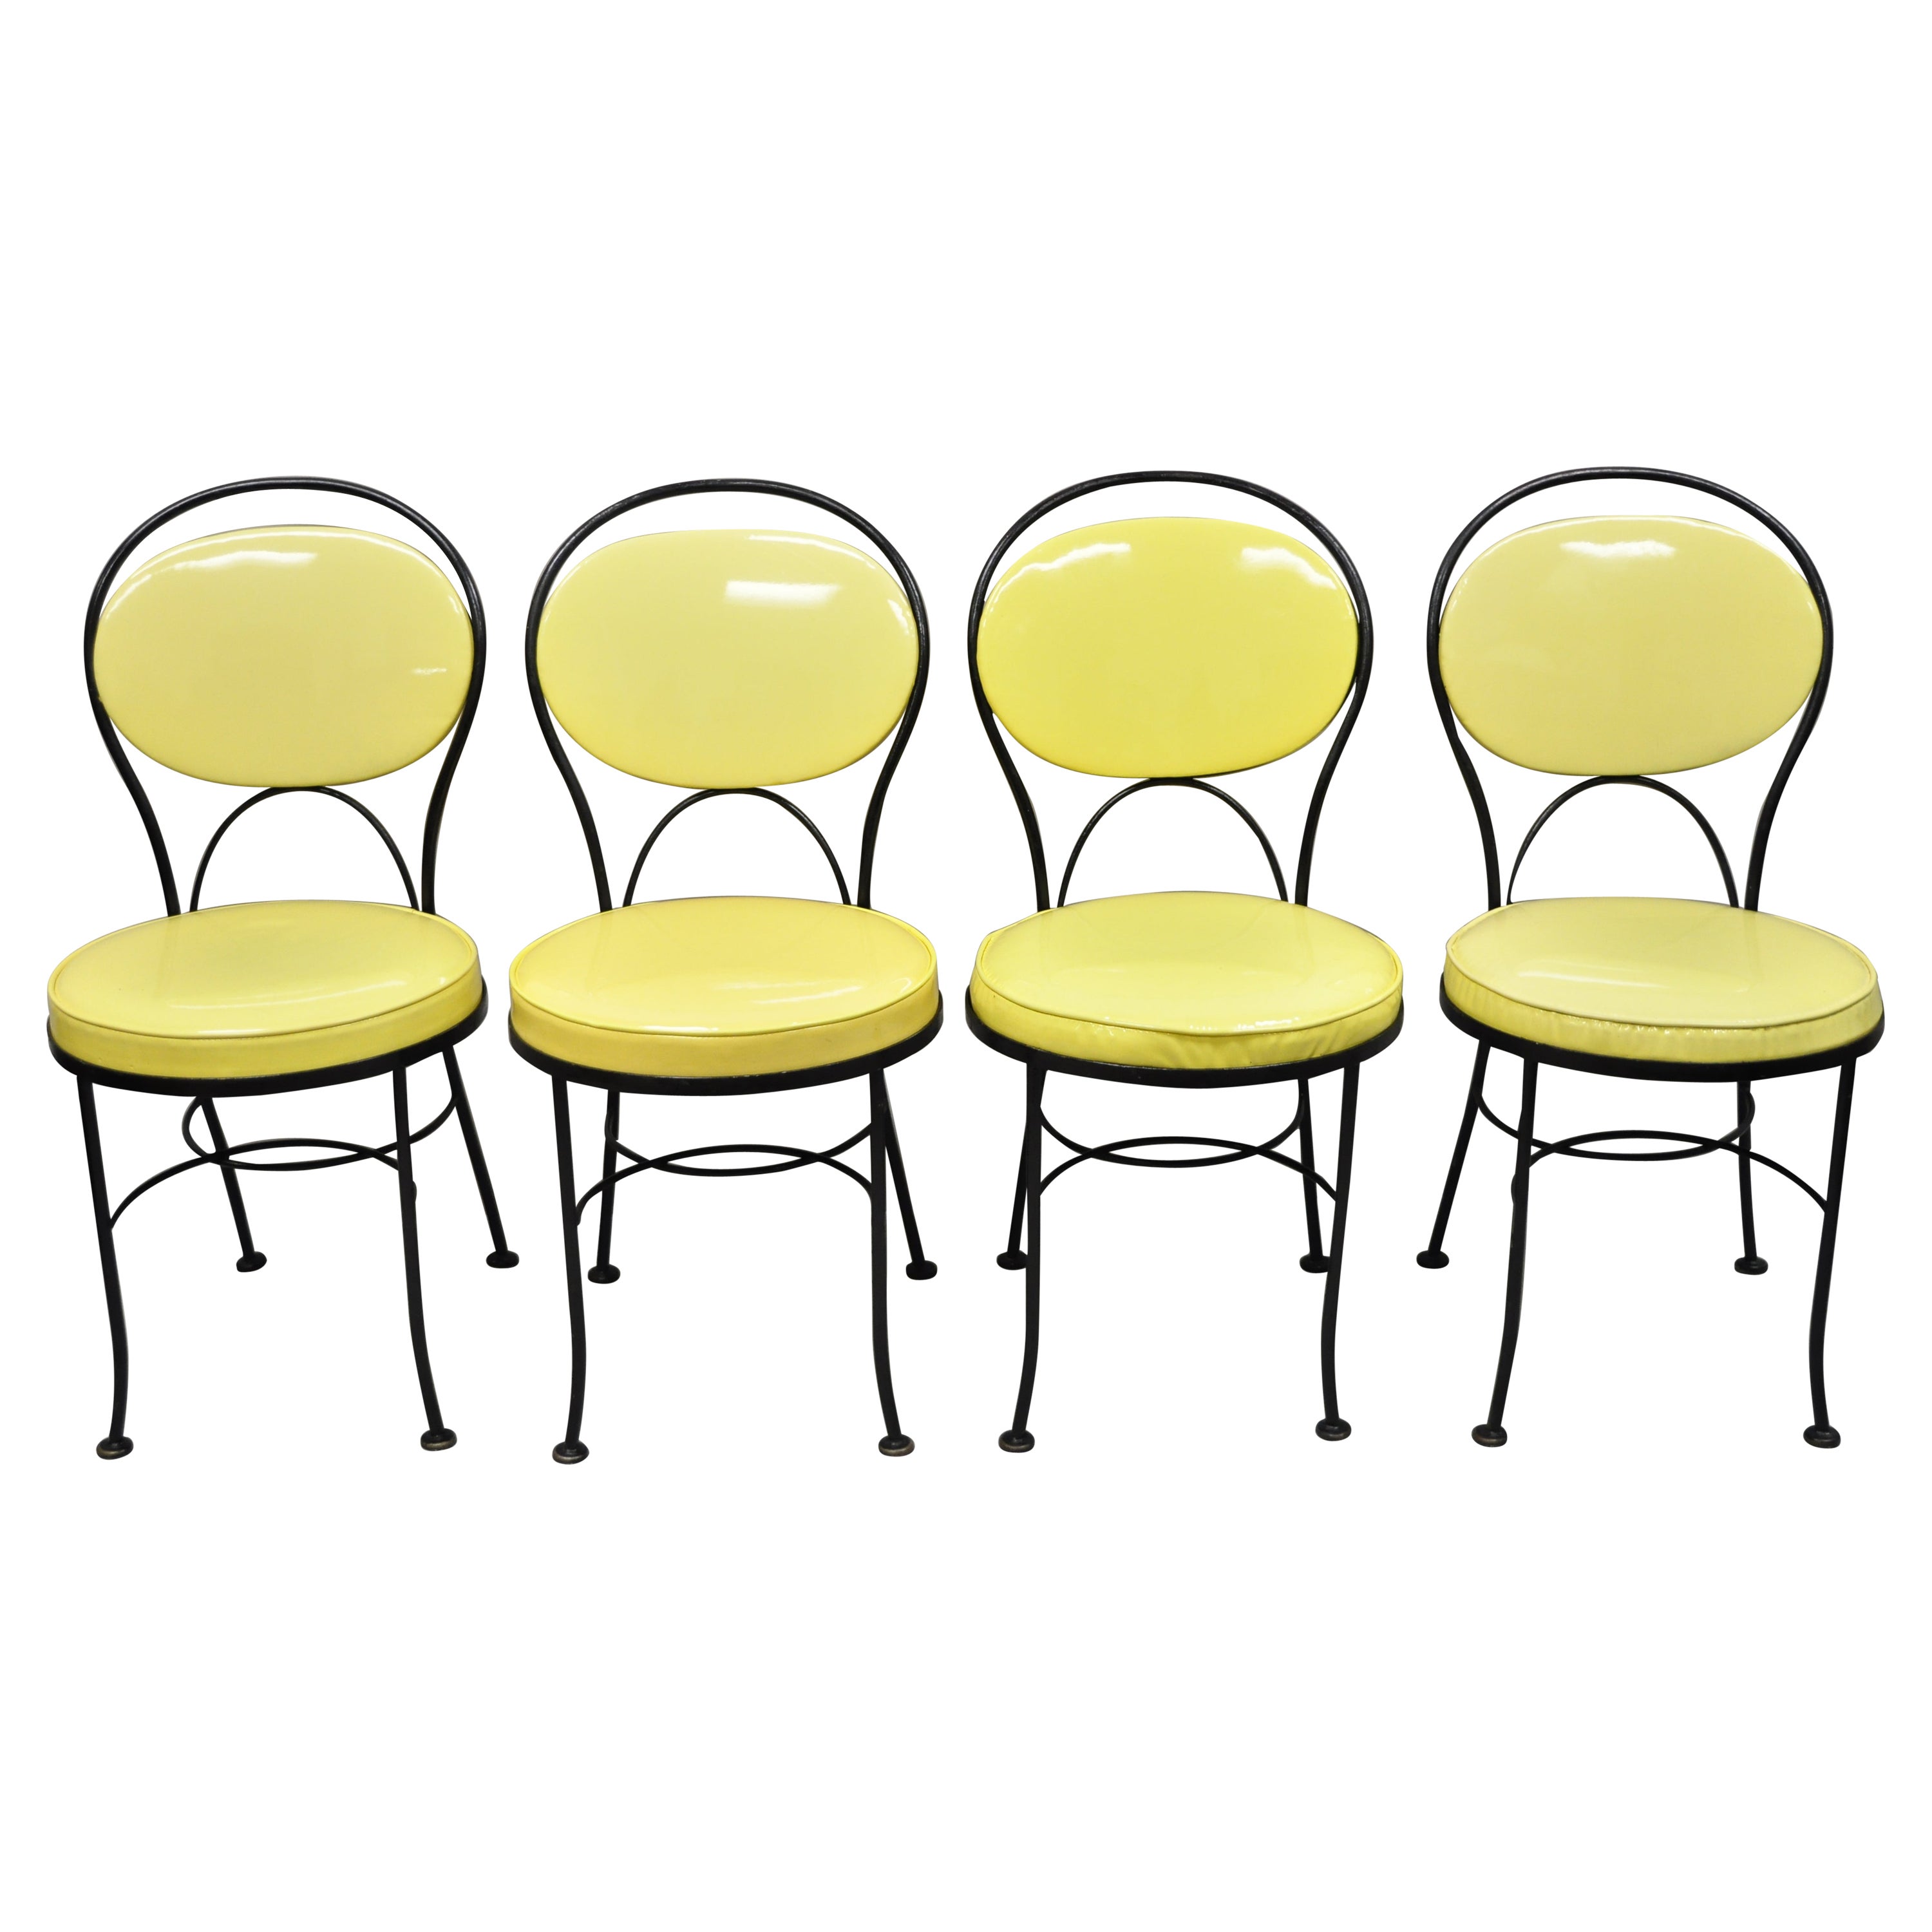 Gallo Iron Works Wrought Iron Yellow Vinyl Modern Bistro Dining Chair, Set of 4